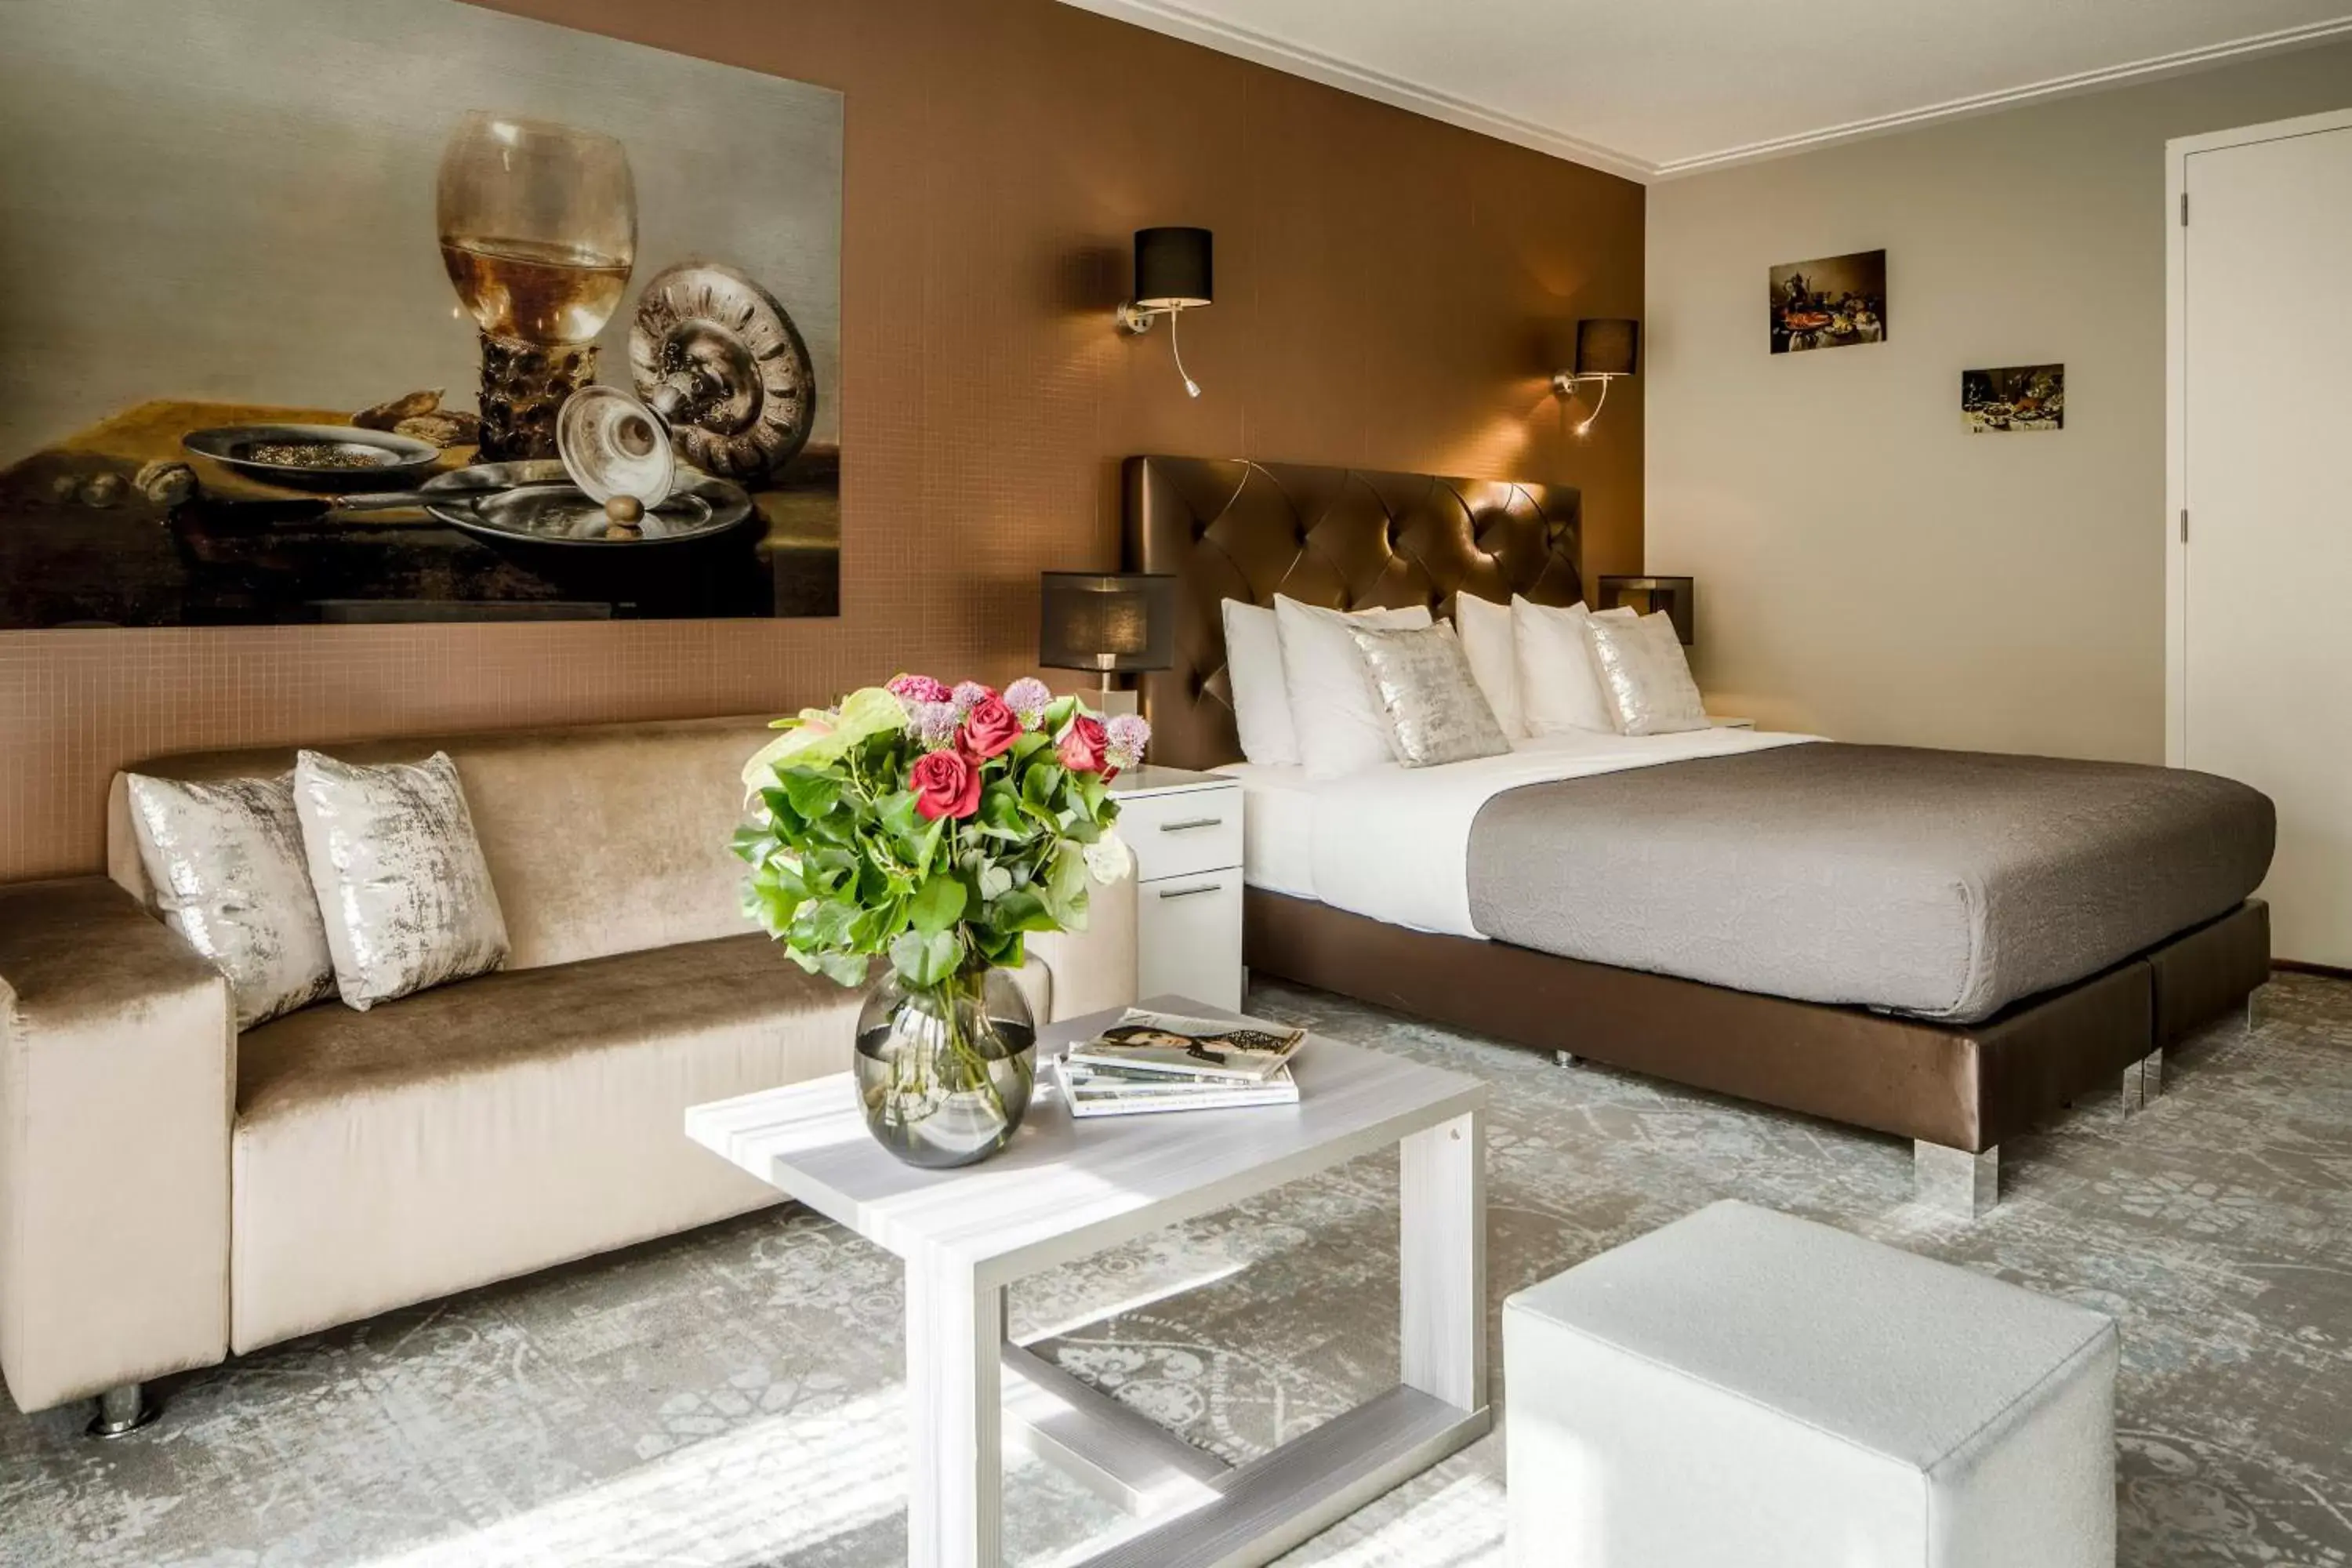 Bedroom, Room Photo in Luxury Suites Amsterdam